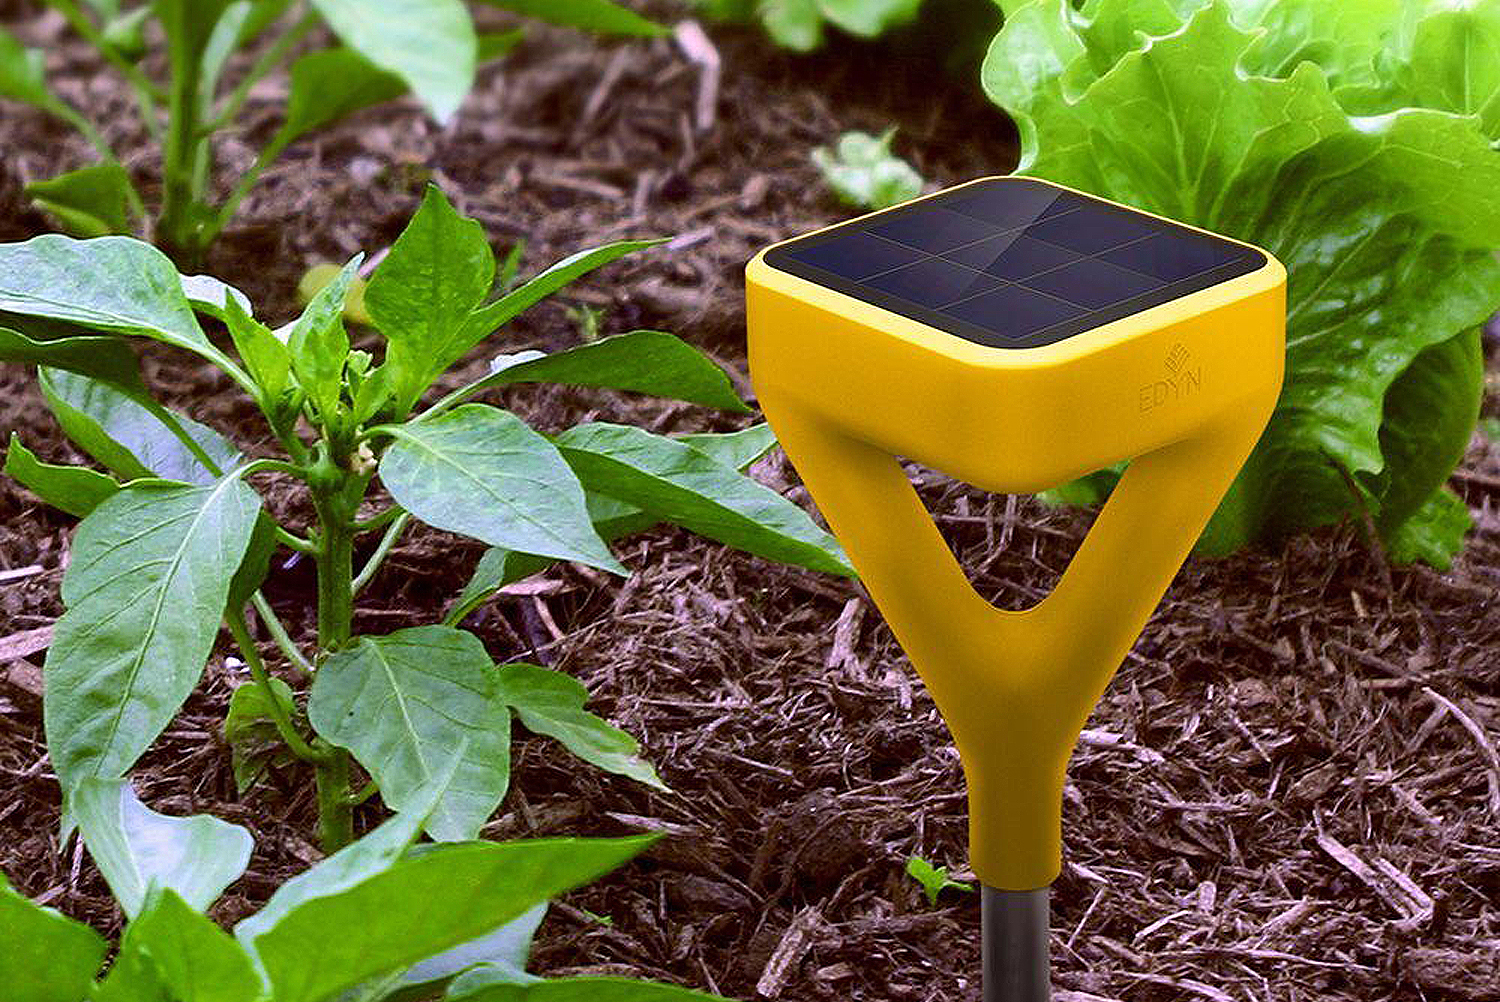 Gardening sensors can make managing a garden much easier. Photo courtesy of Edyn